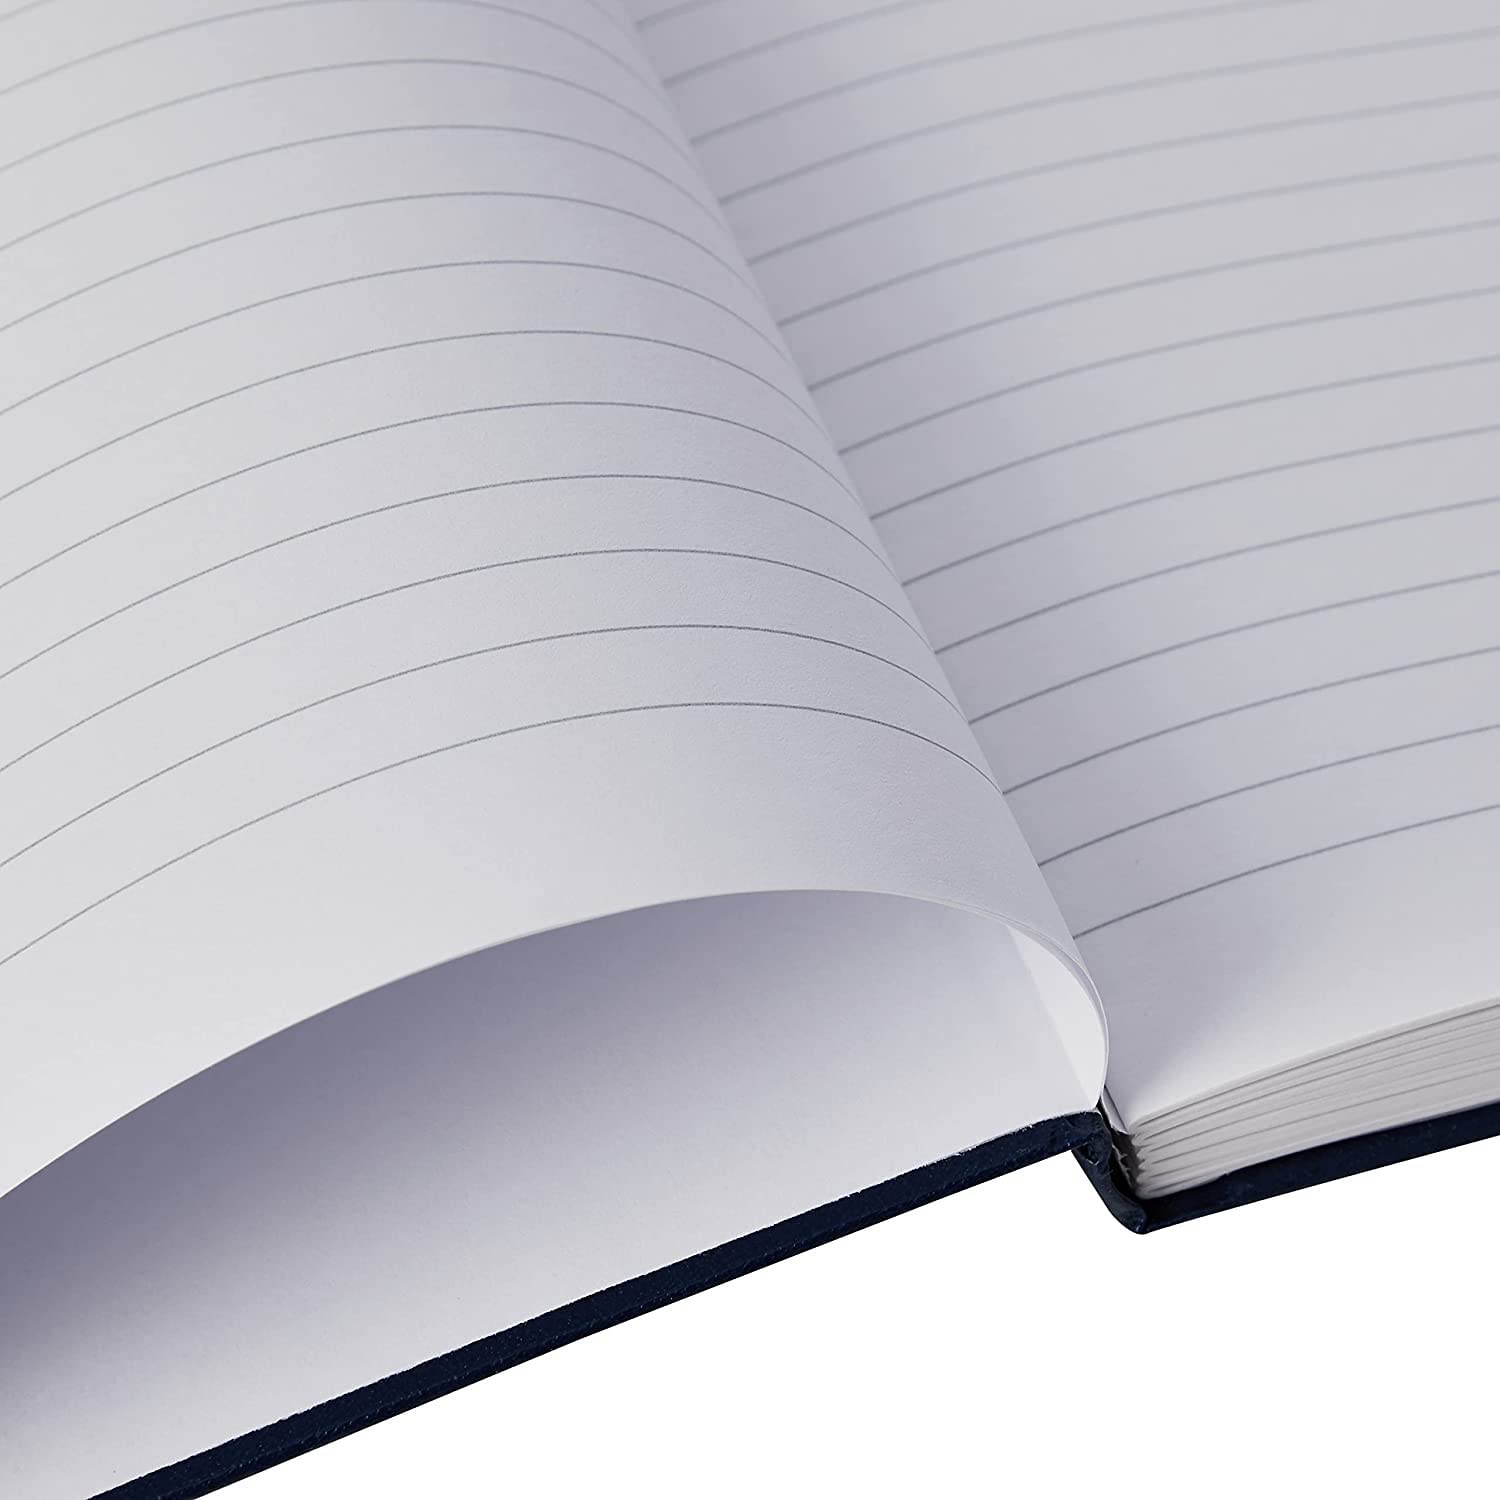 PUKKA PAD, Notebook - Manuscript | A6 | 192 Pg | 70 gsm.